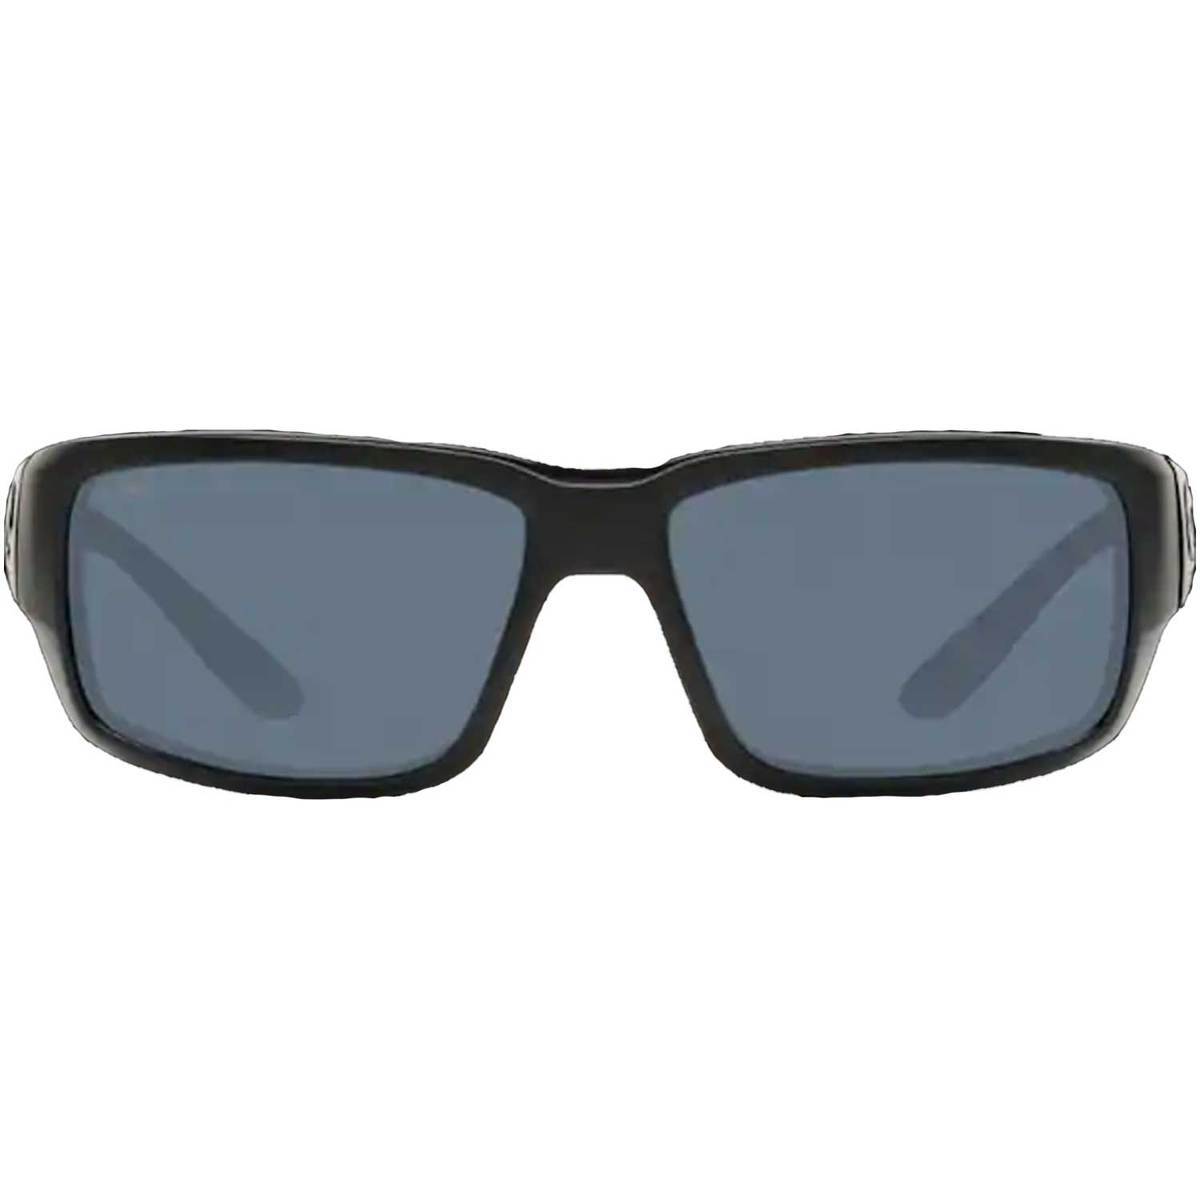 Costa Fantail Polarized Sunglasses - Blackout/Gray | Sportsman's Warehouse